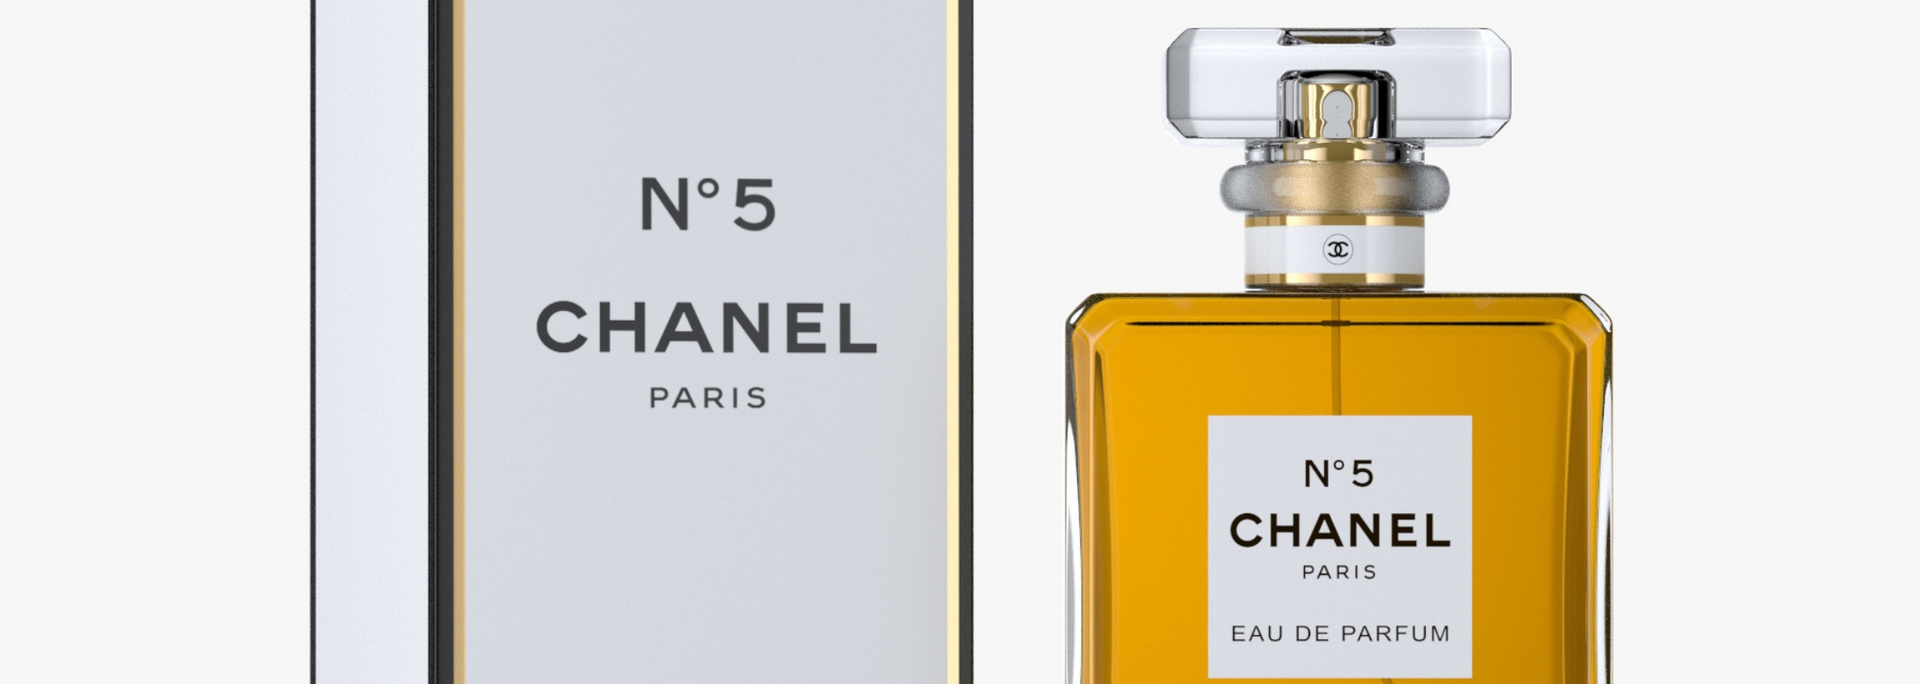 Picture of Chanel No5 perfume box.